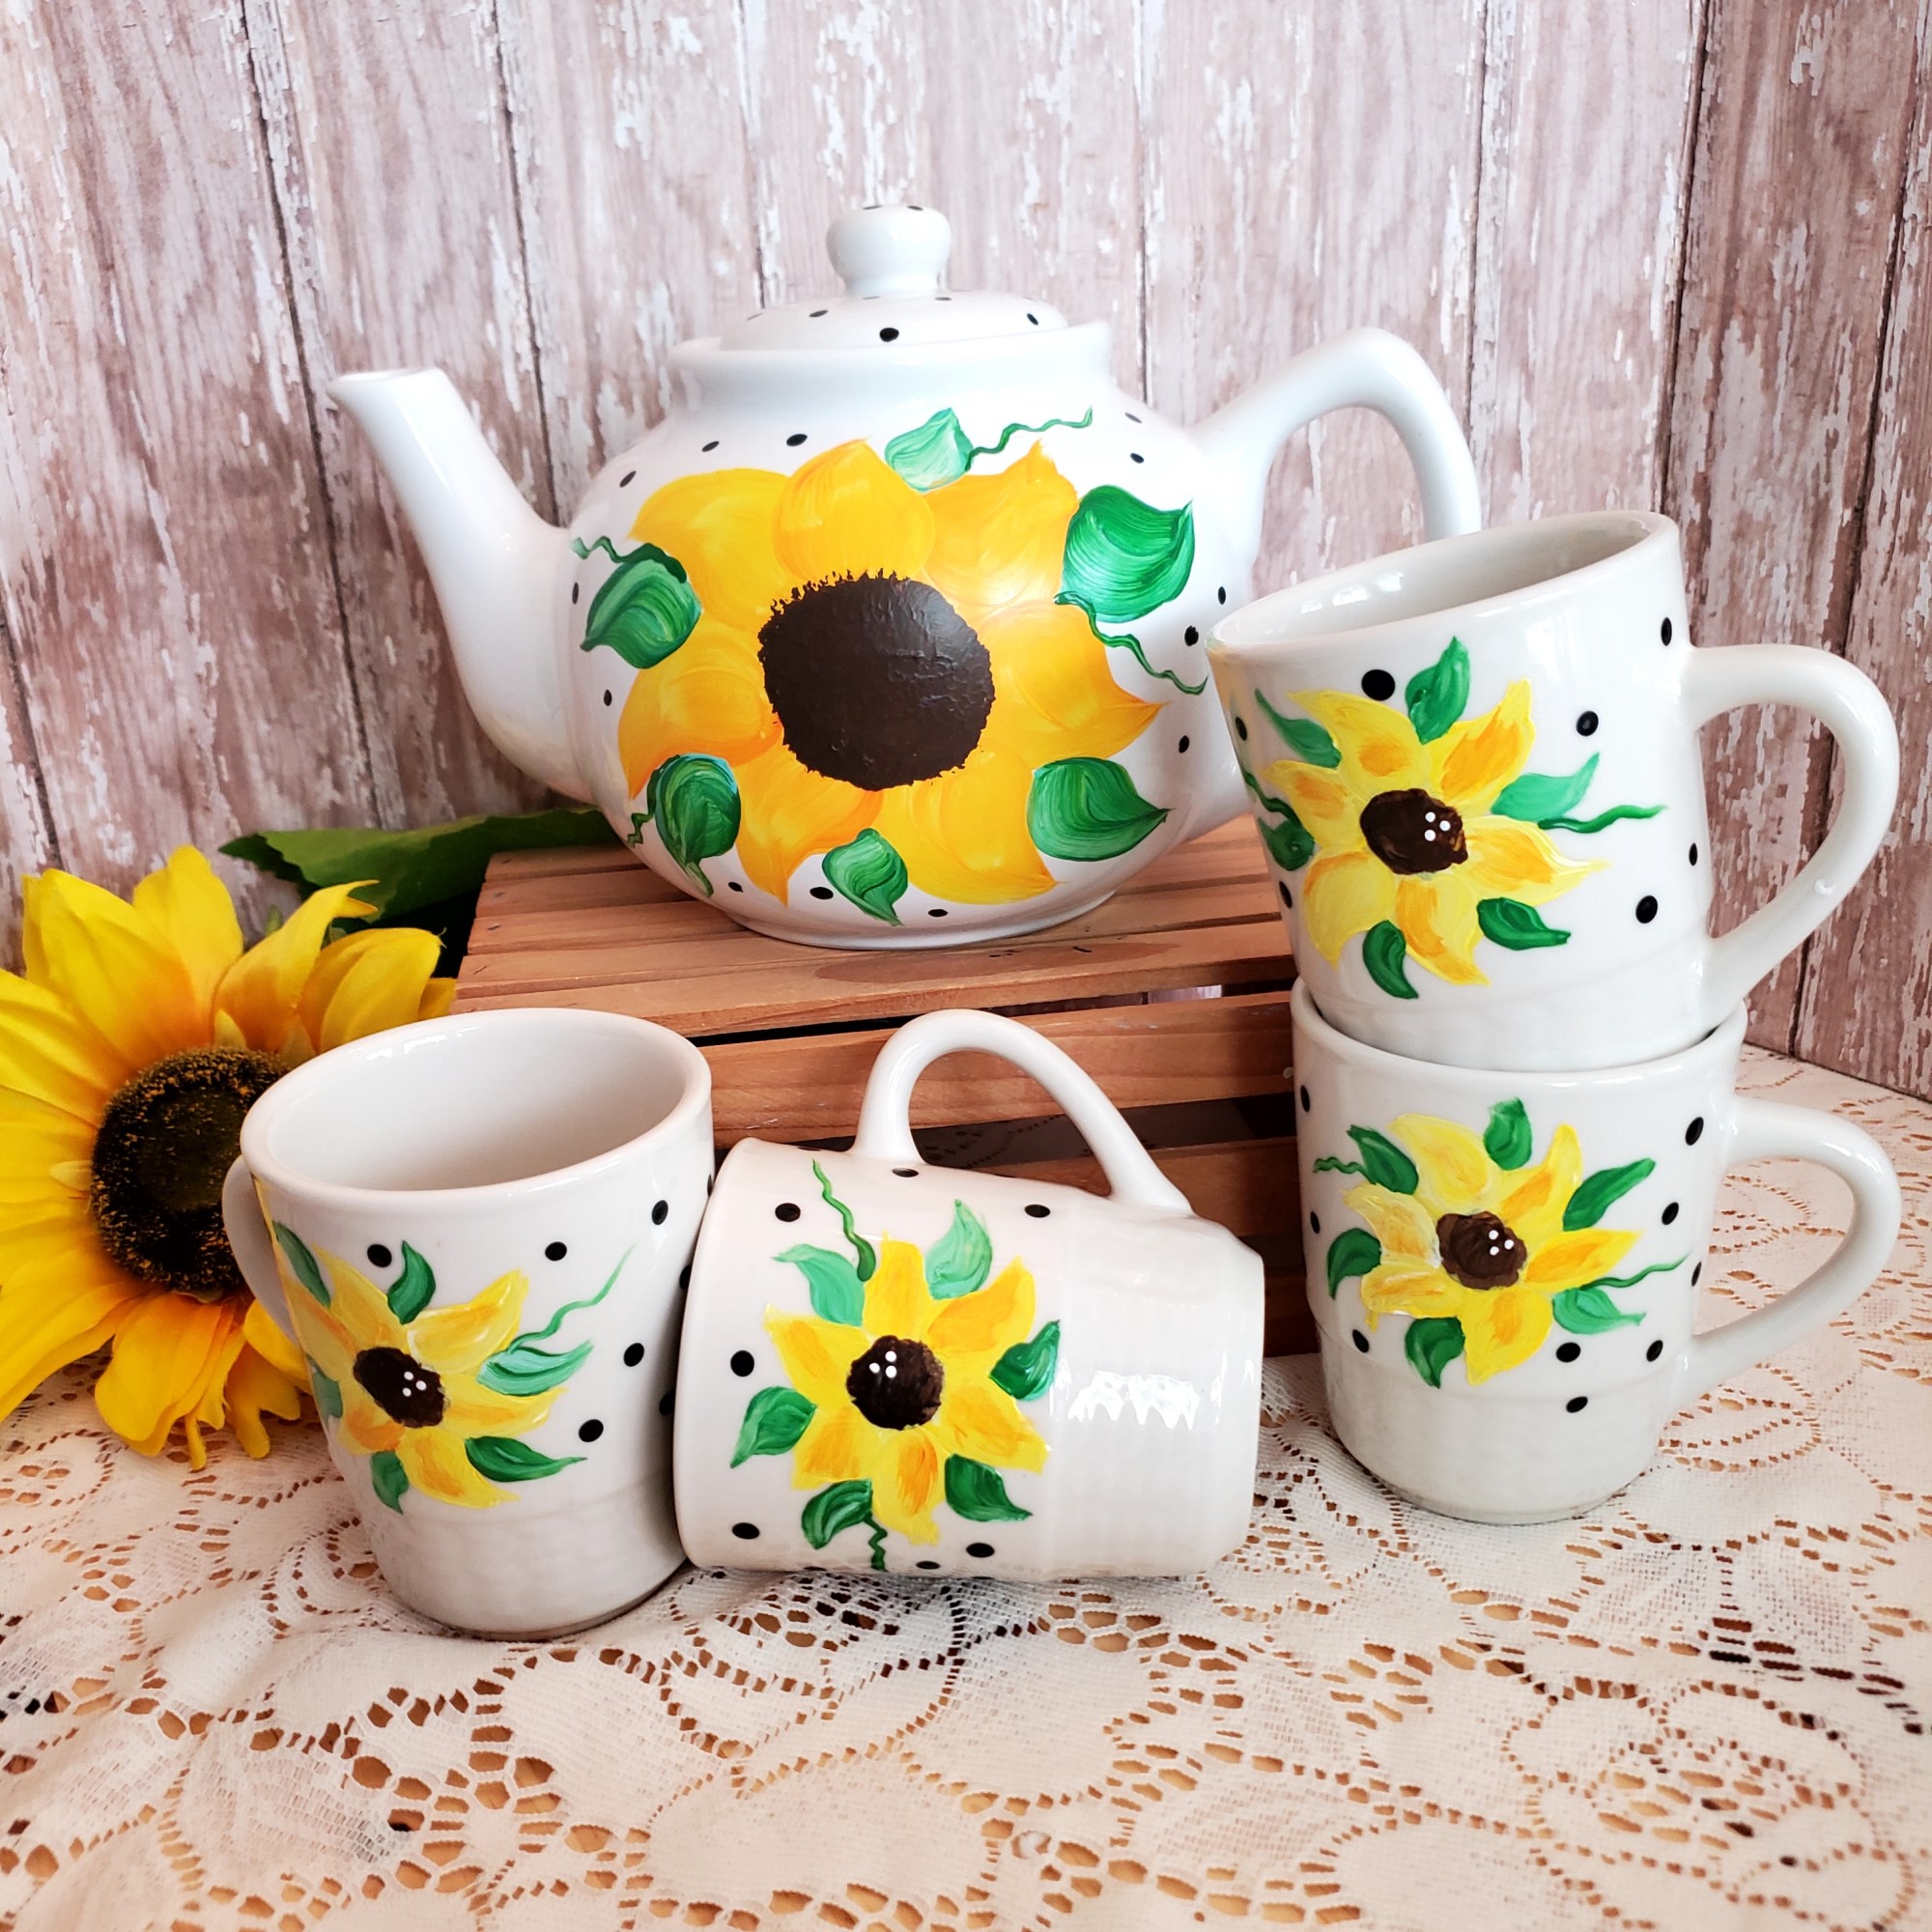 Cute Ceramic Teapot, Teapot for One, Handmade Pottery Tea Pot, Artisan  Ceramic Gift, Red Ceramic Teapot 